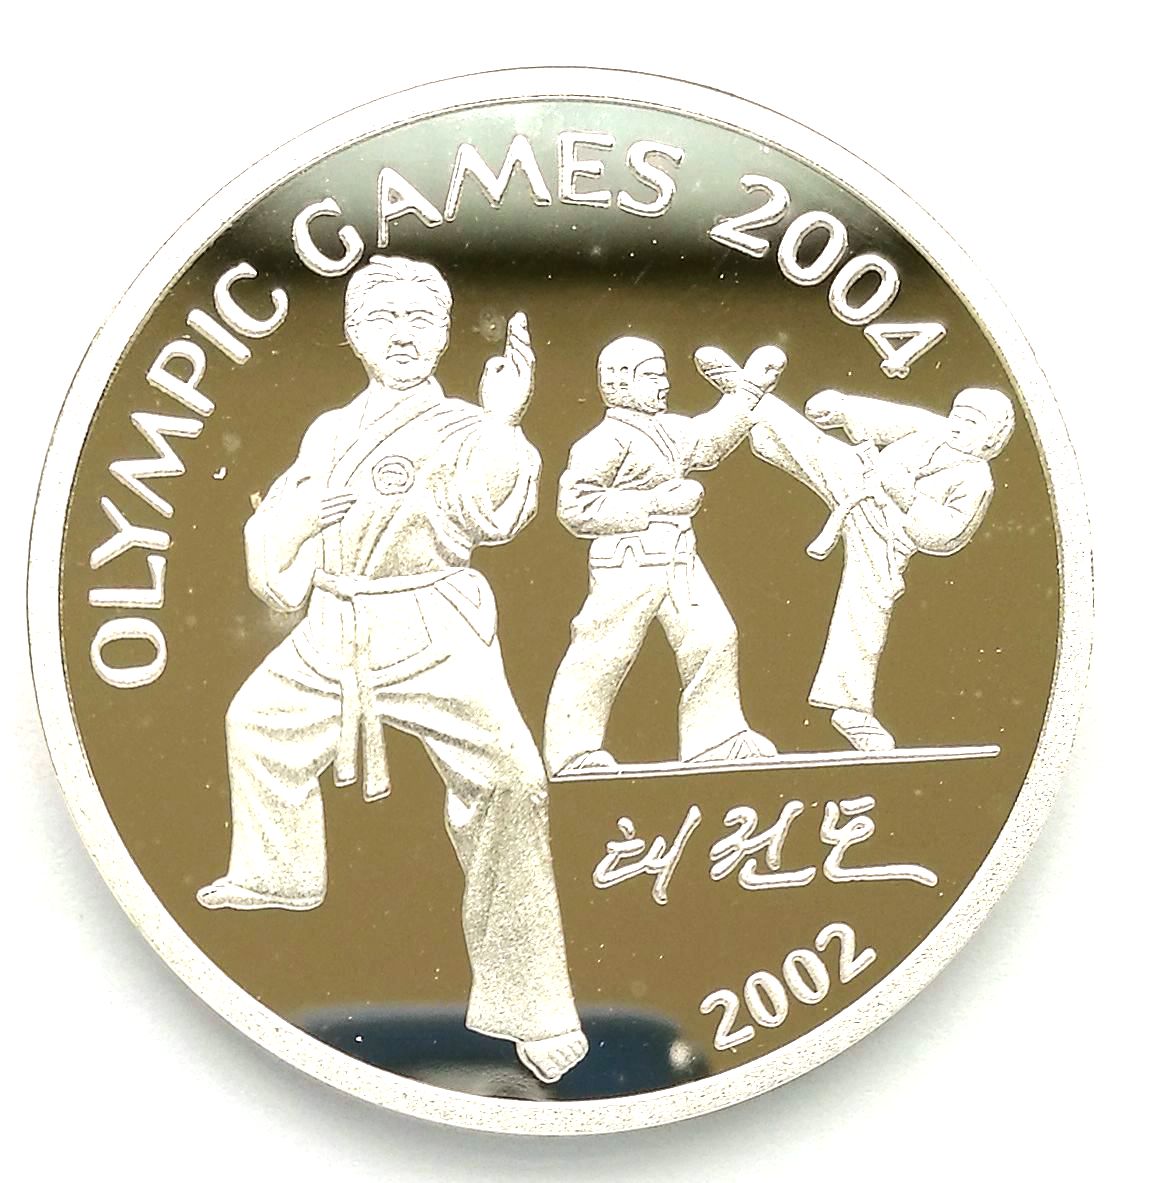 L3450, Korea "Taekwondo" 2004 Olympics Games, Silver Coin 1 oz. 2002